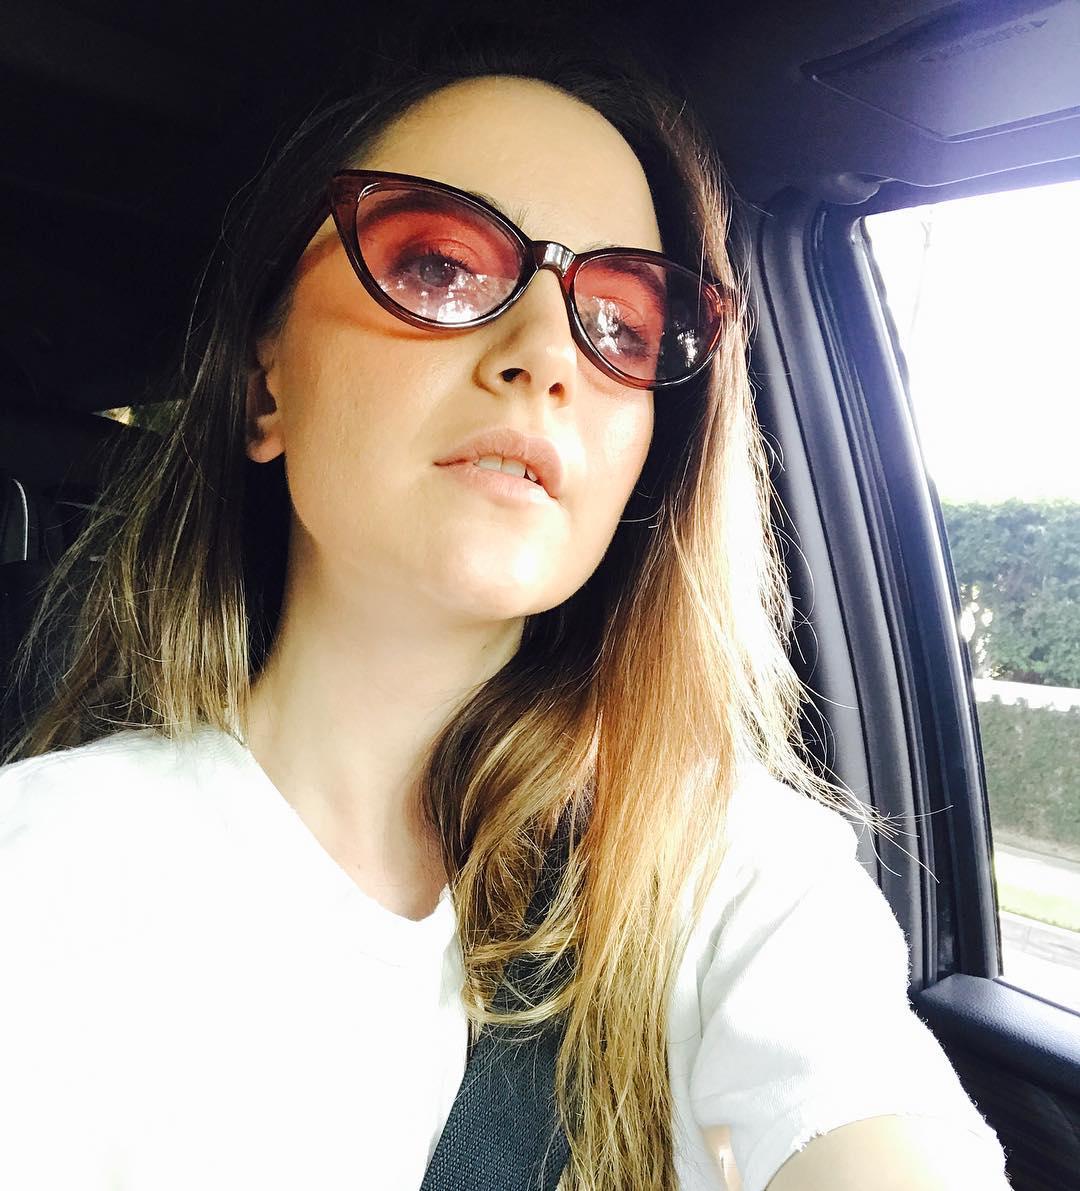 Alexa Nikolas taking a selfie in a car with sunglasses on